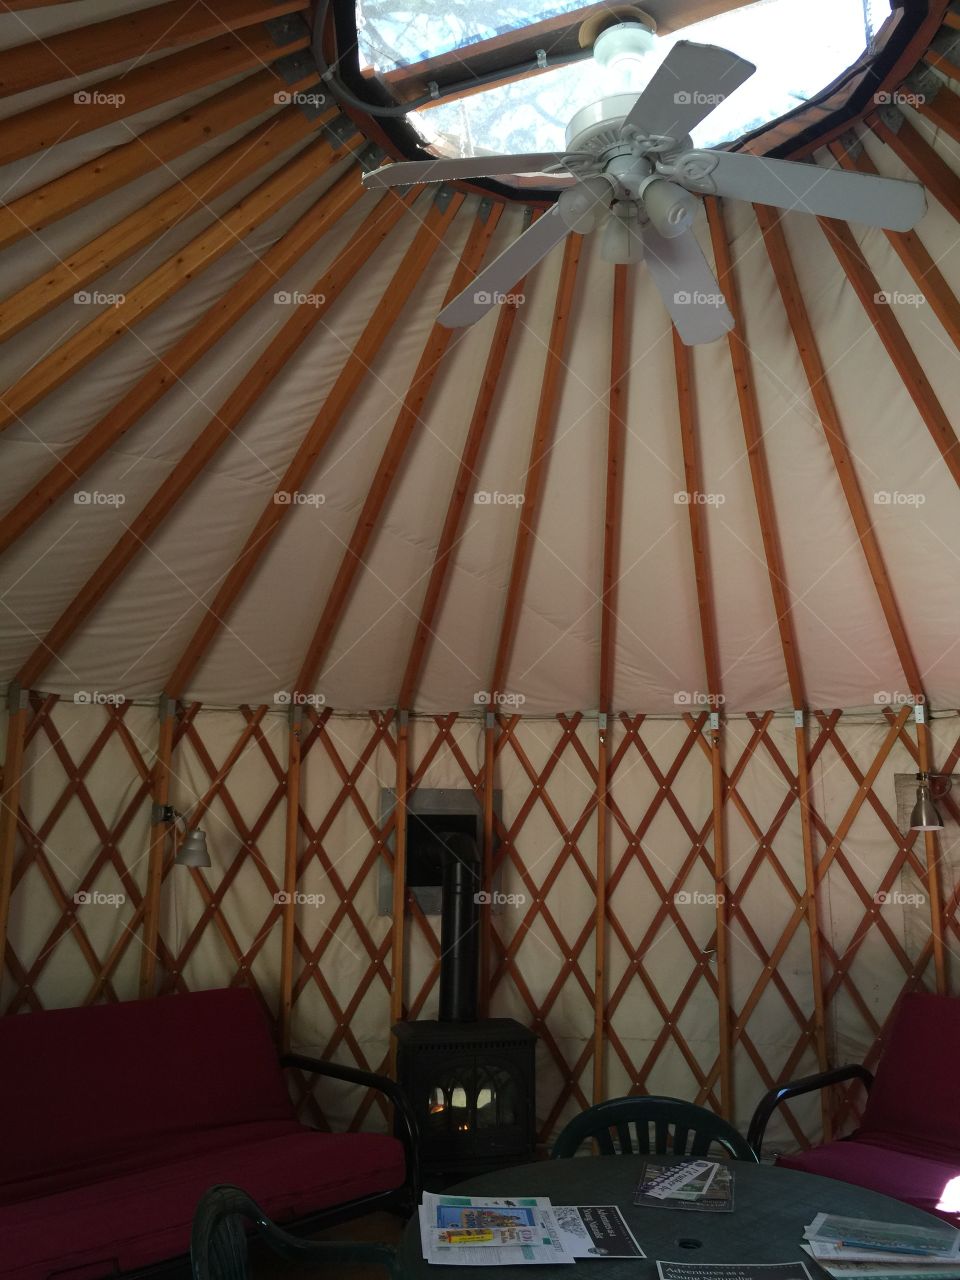 Keeping warm inside a yurt. 